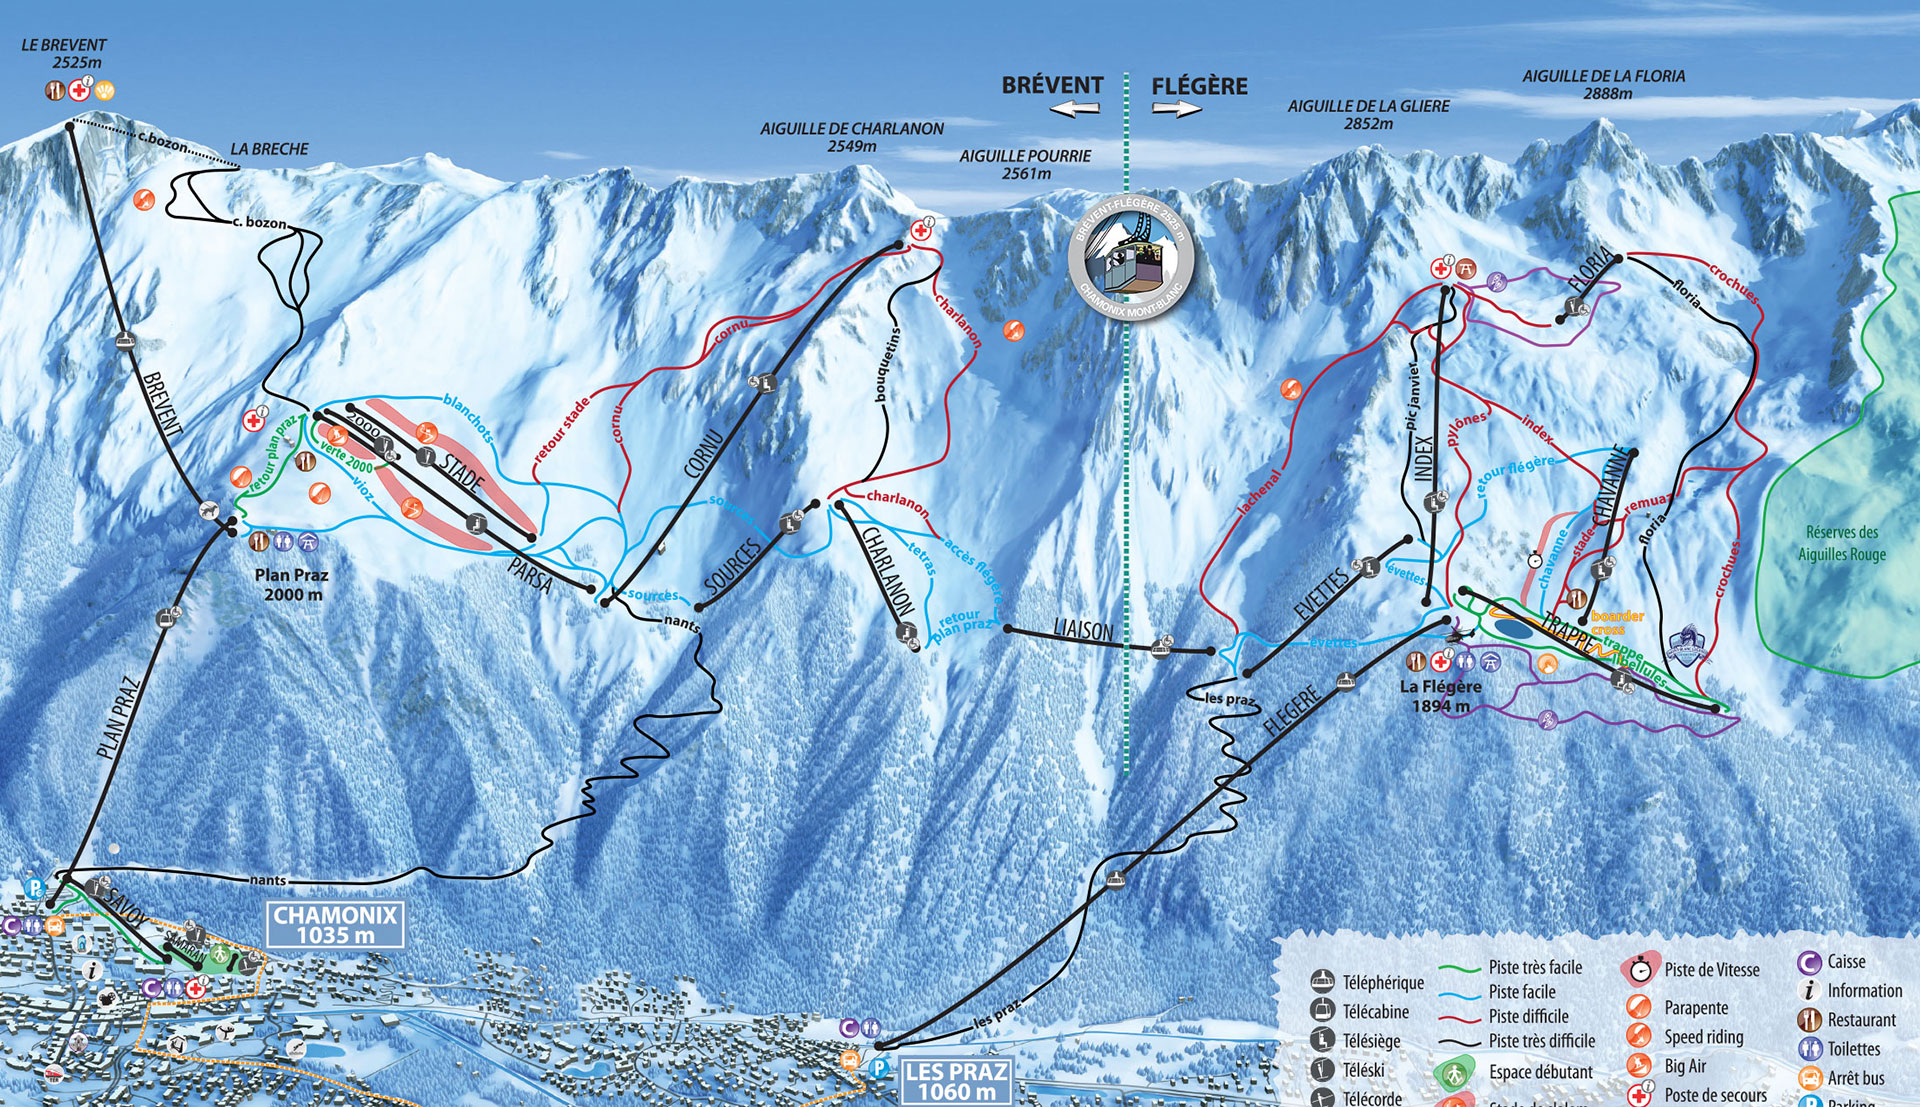 Piste map for 2011/2012 season for the Brévent and Flégère ski areas.